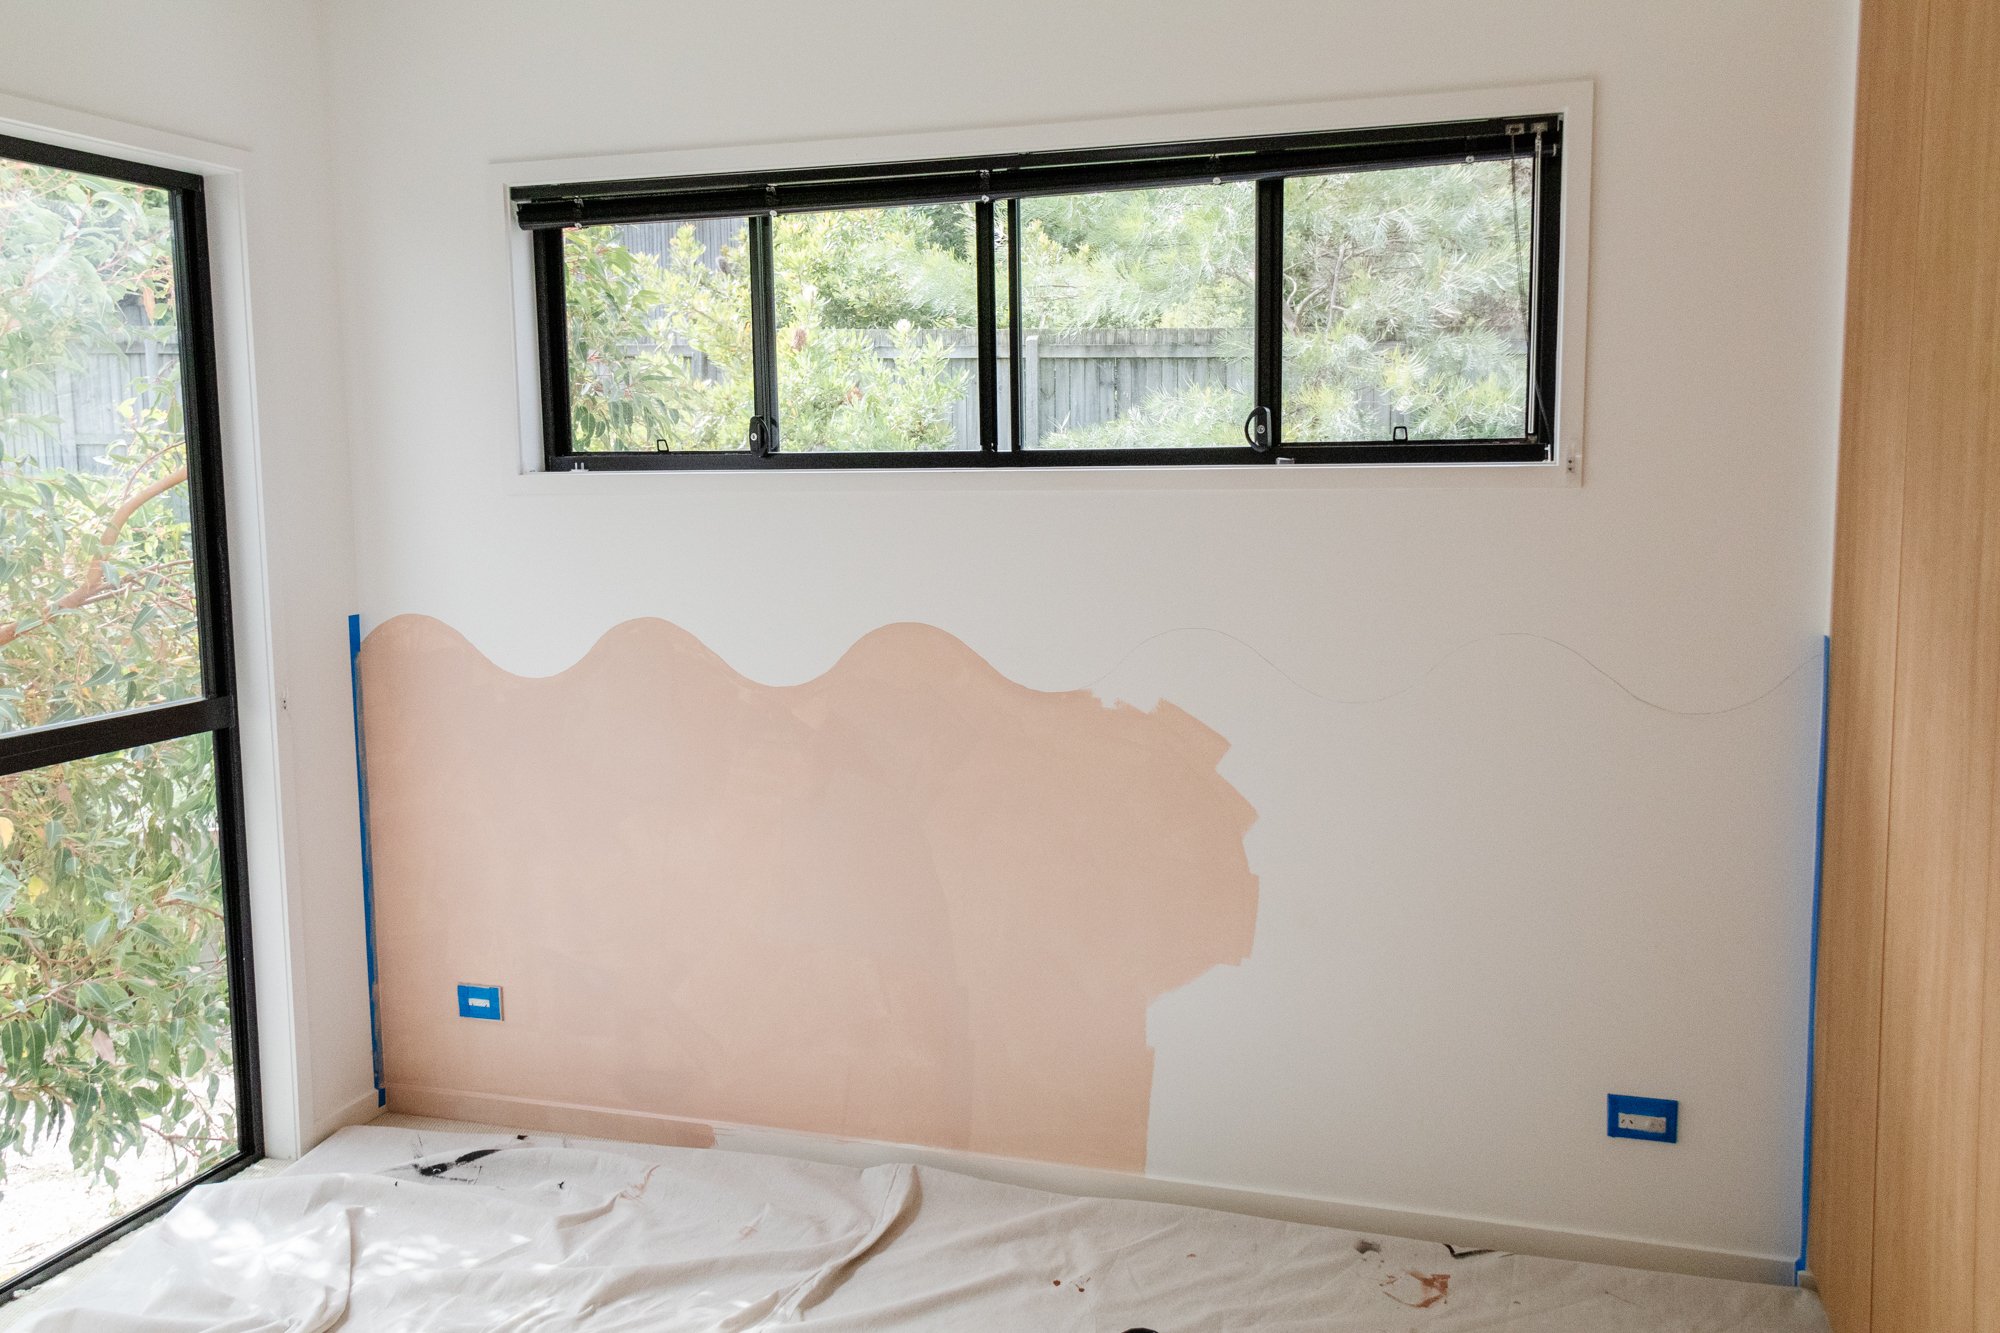 DIY Wavy Painted Wall_Smor Home_Jaharn Quinn (7 of 33).jpg